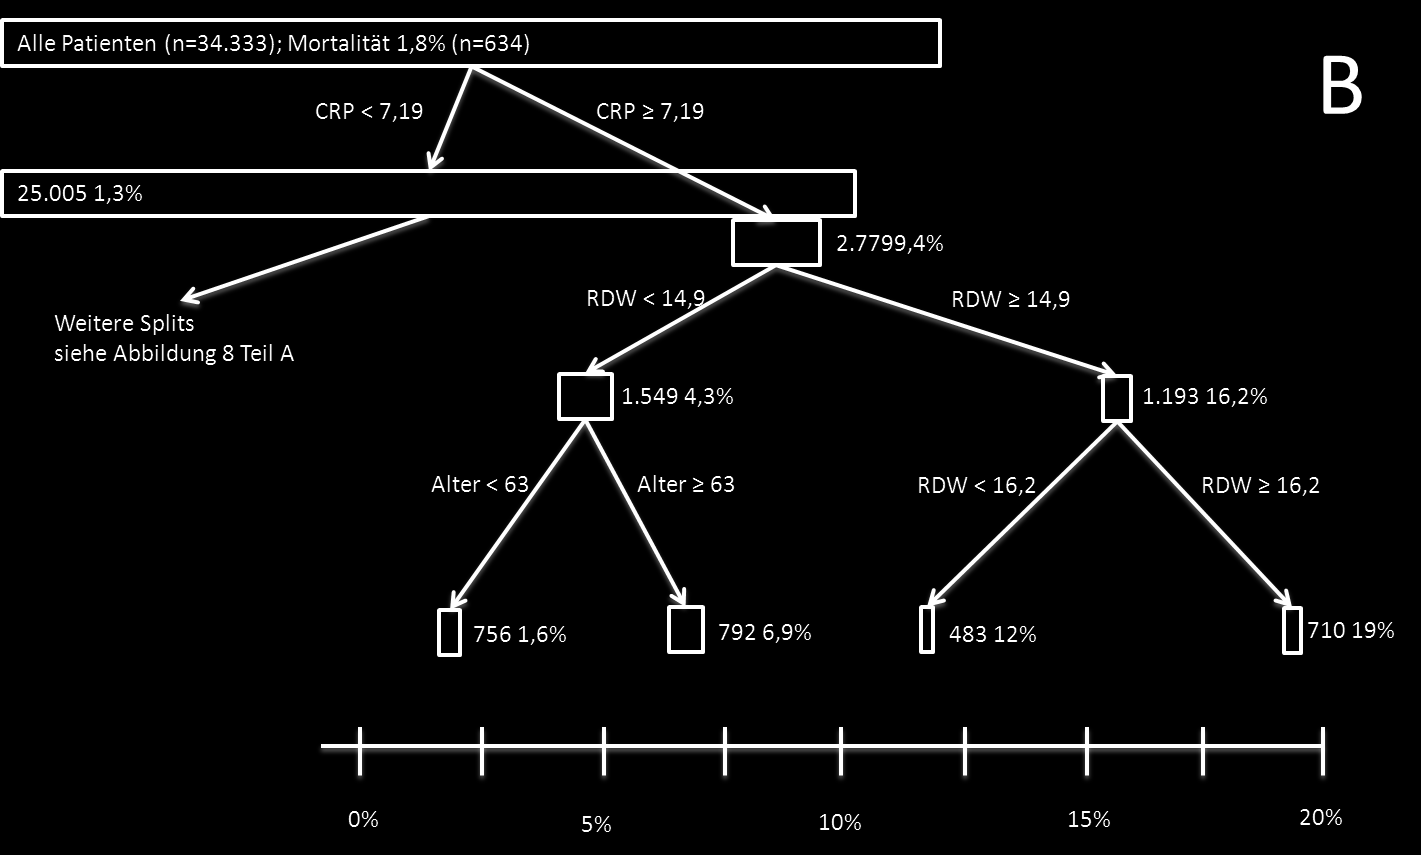 Abbildung 8: Classification and Regression Tree Abbildung 8: Ergebnis der CART-Analyse: Abbildung A zeigt das Ergebnis der CART-Analyse für Patienten mit